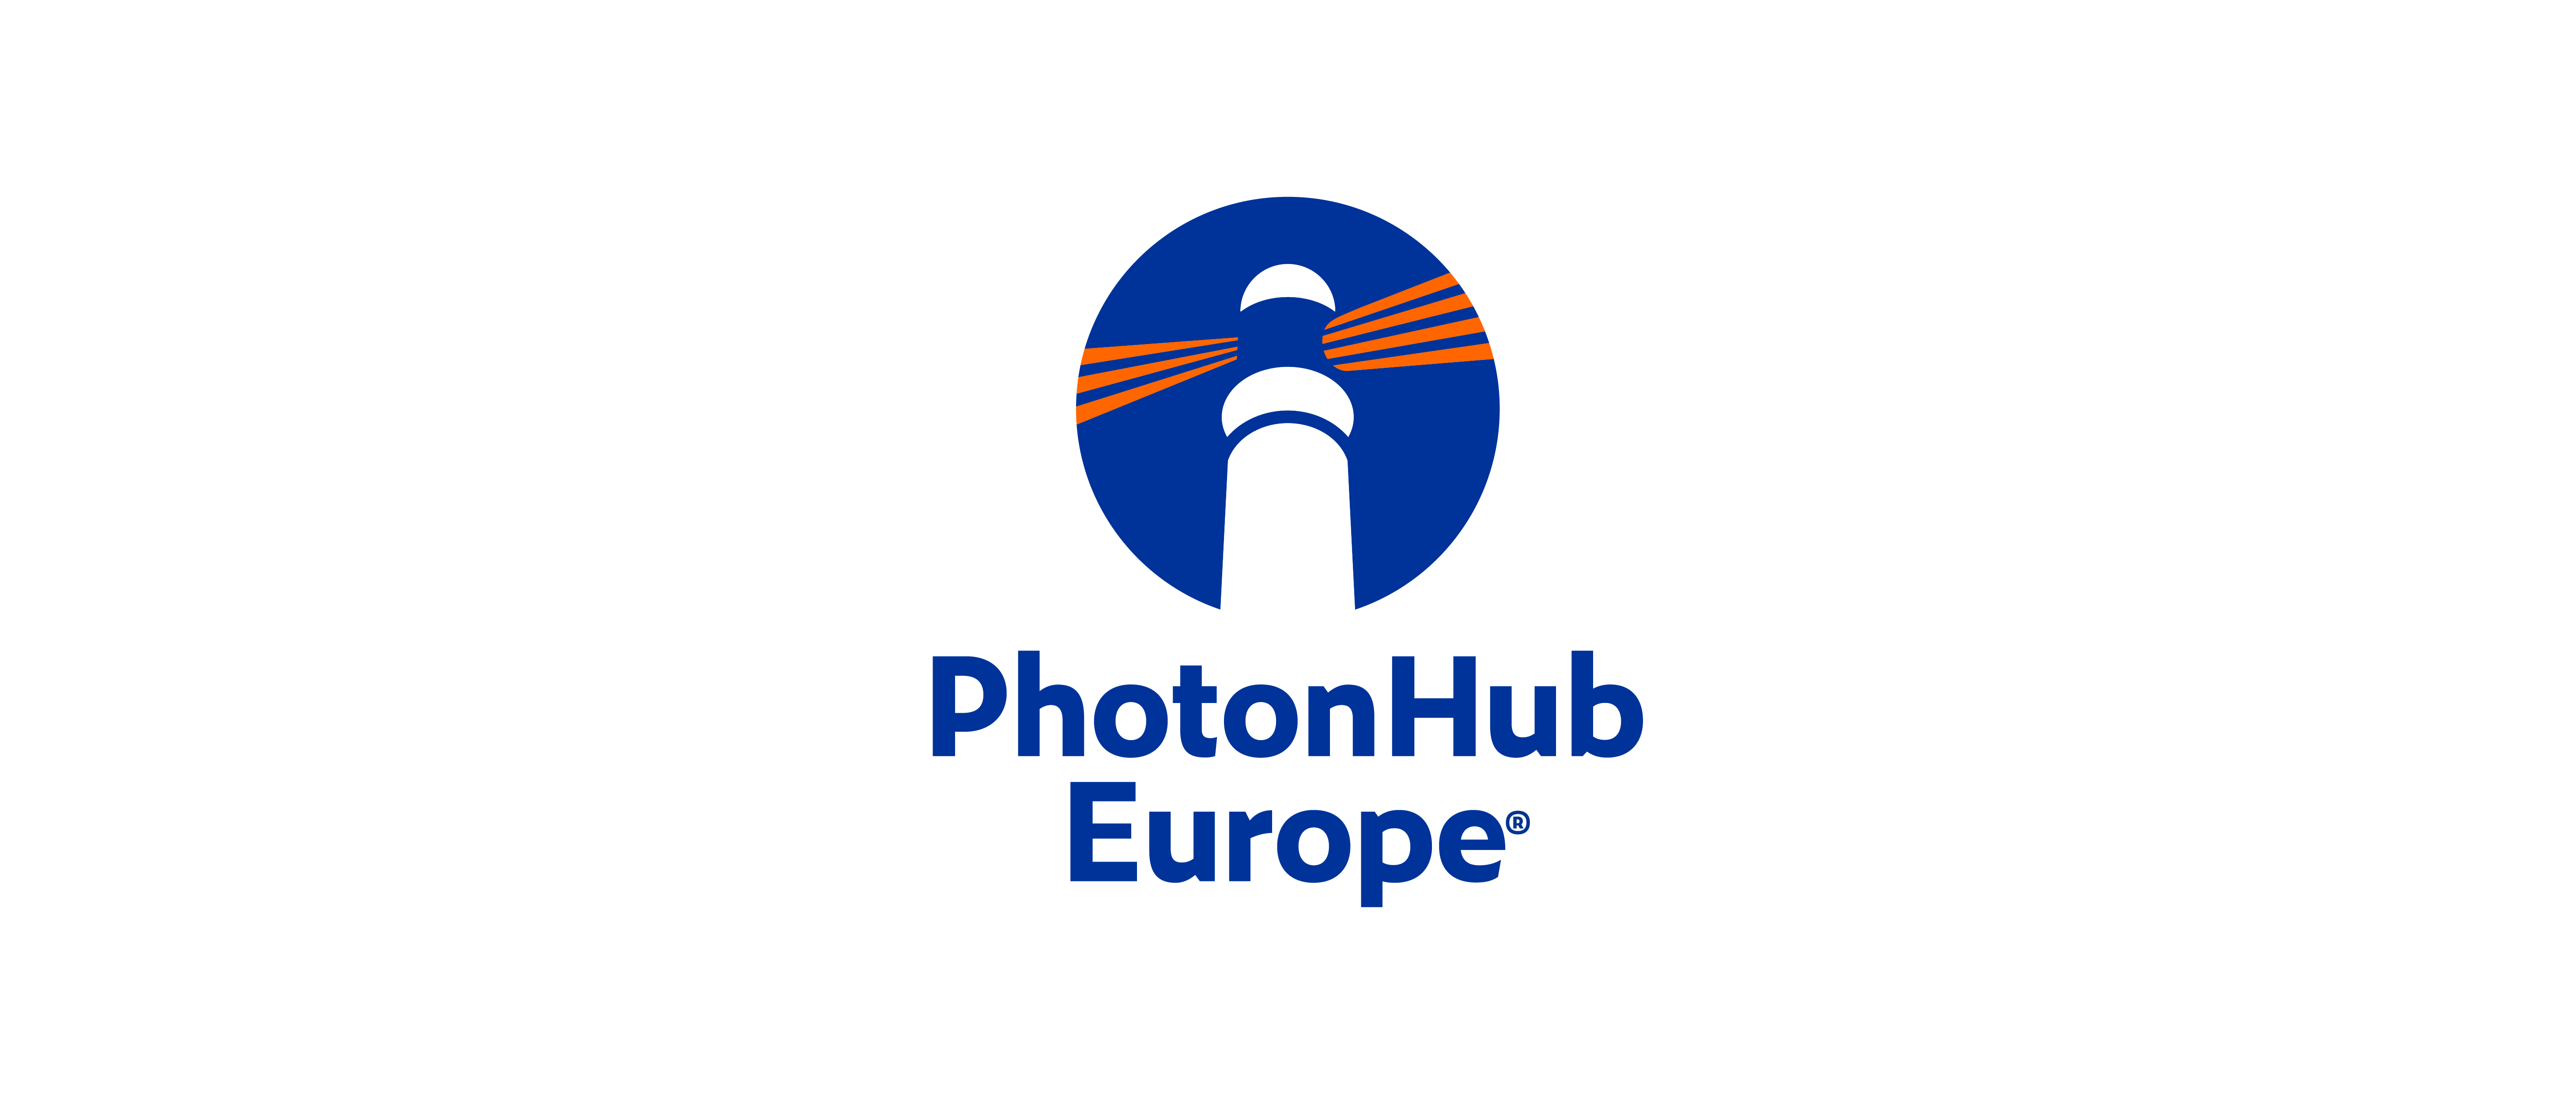 Photon Hub Europe B PHOT